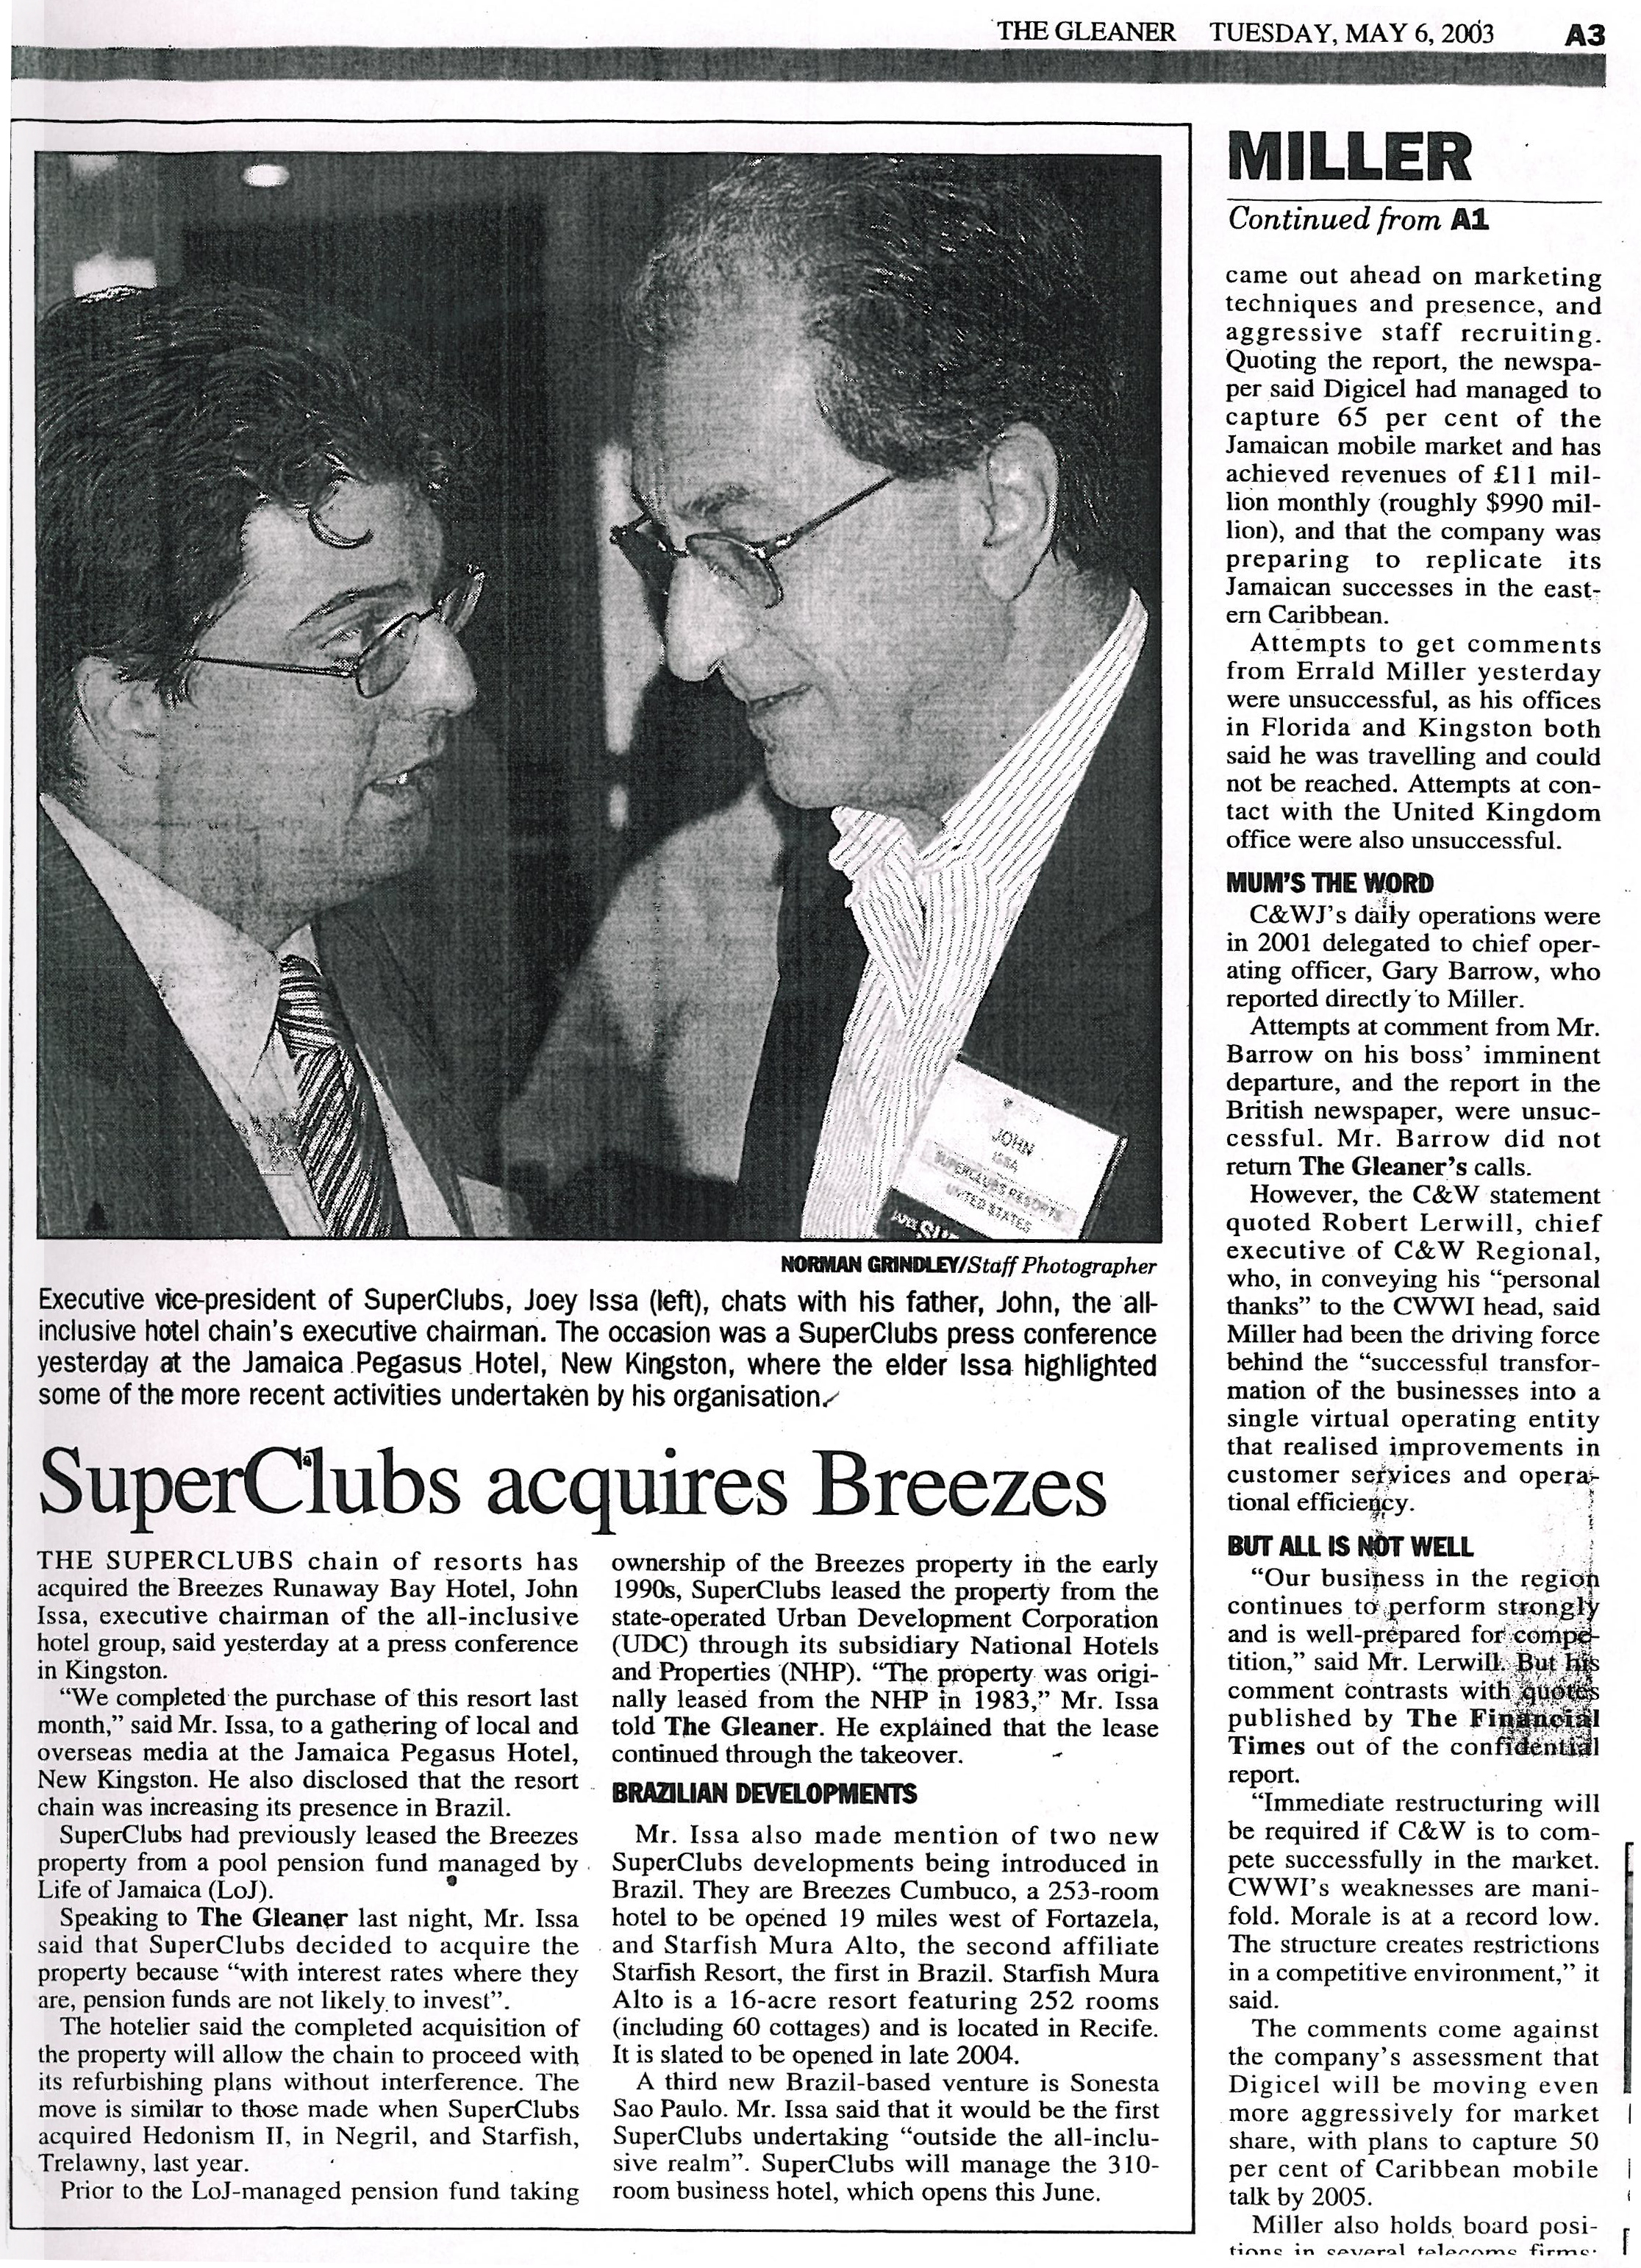 SuperClubs acquires Breezes